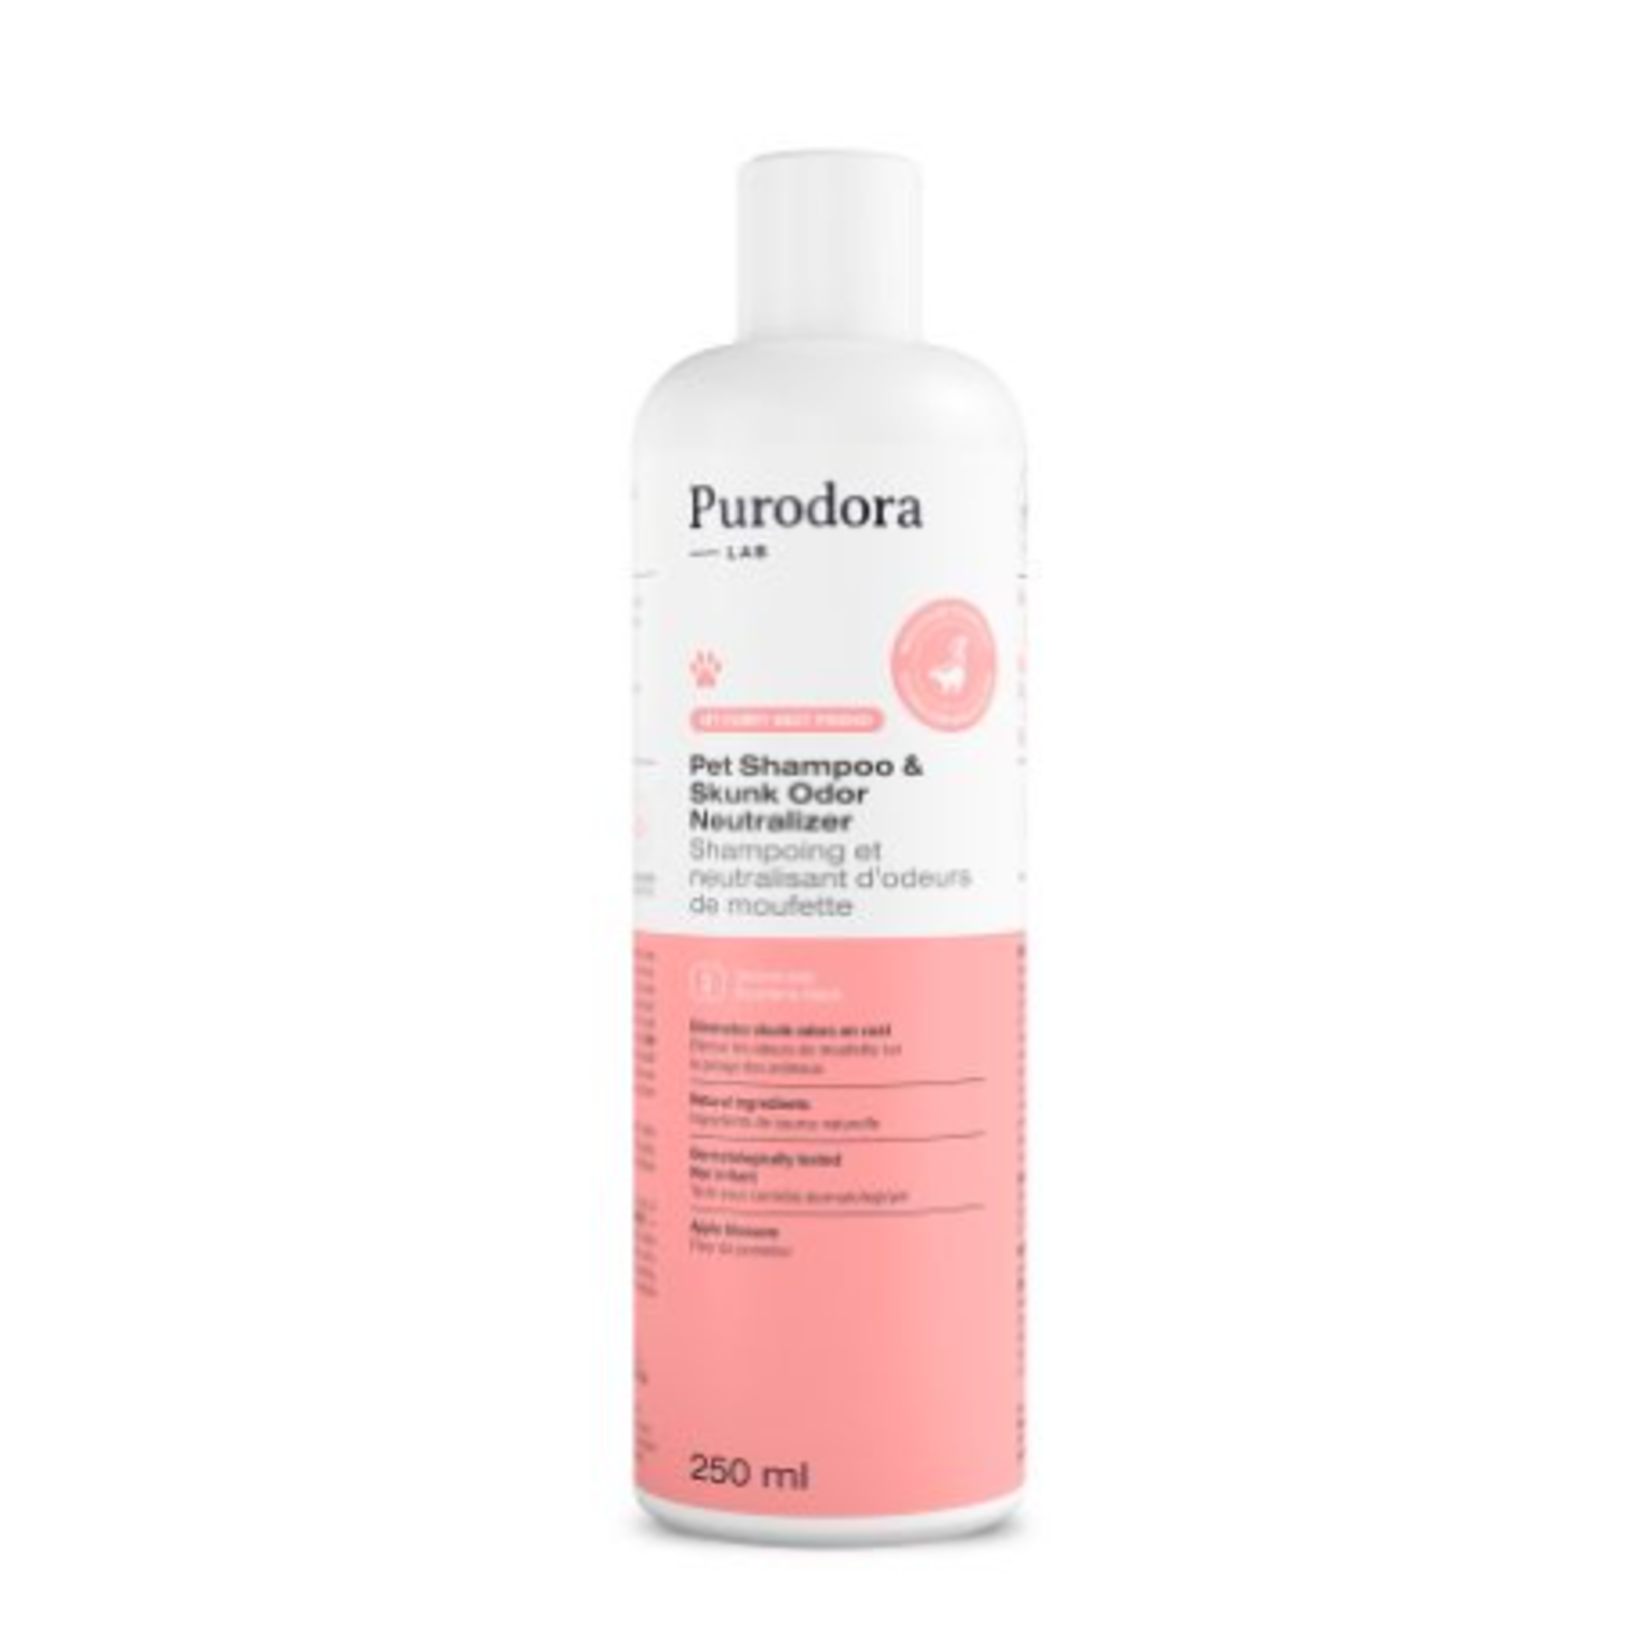 Purodora Lab Shampoing Neutralisant D'odeurs De Moufette - 250 ml